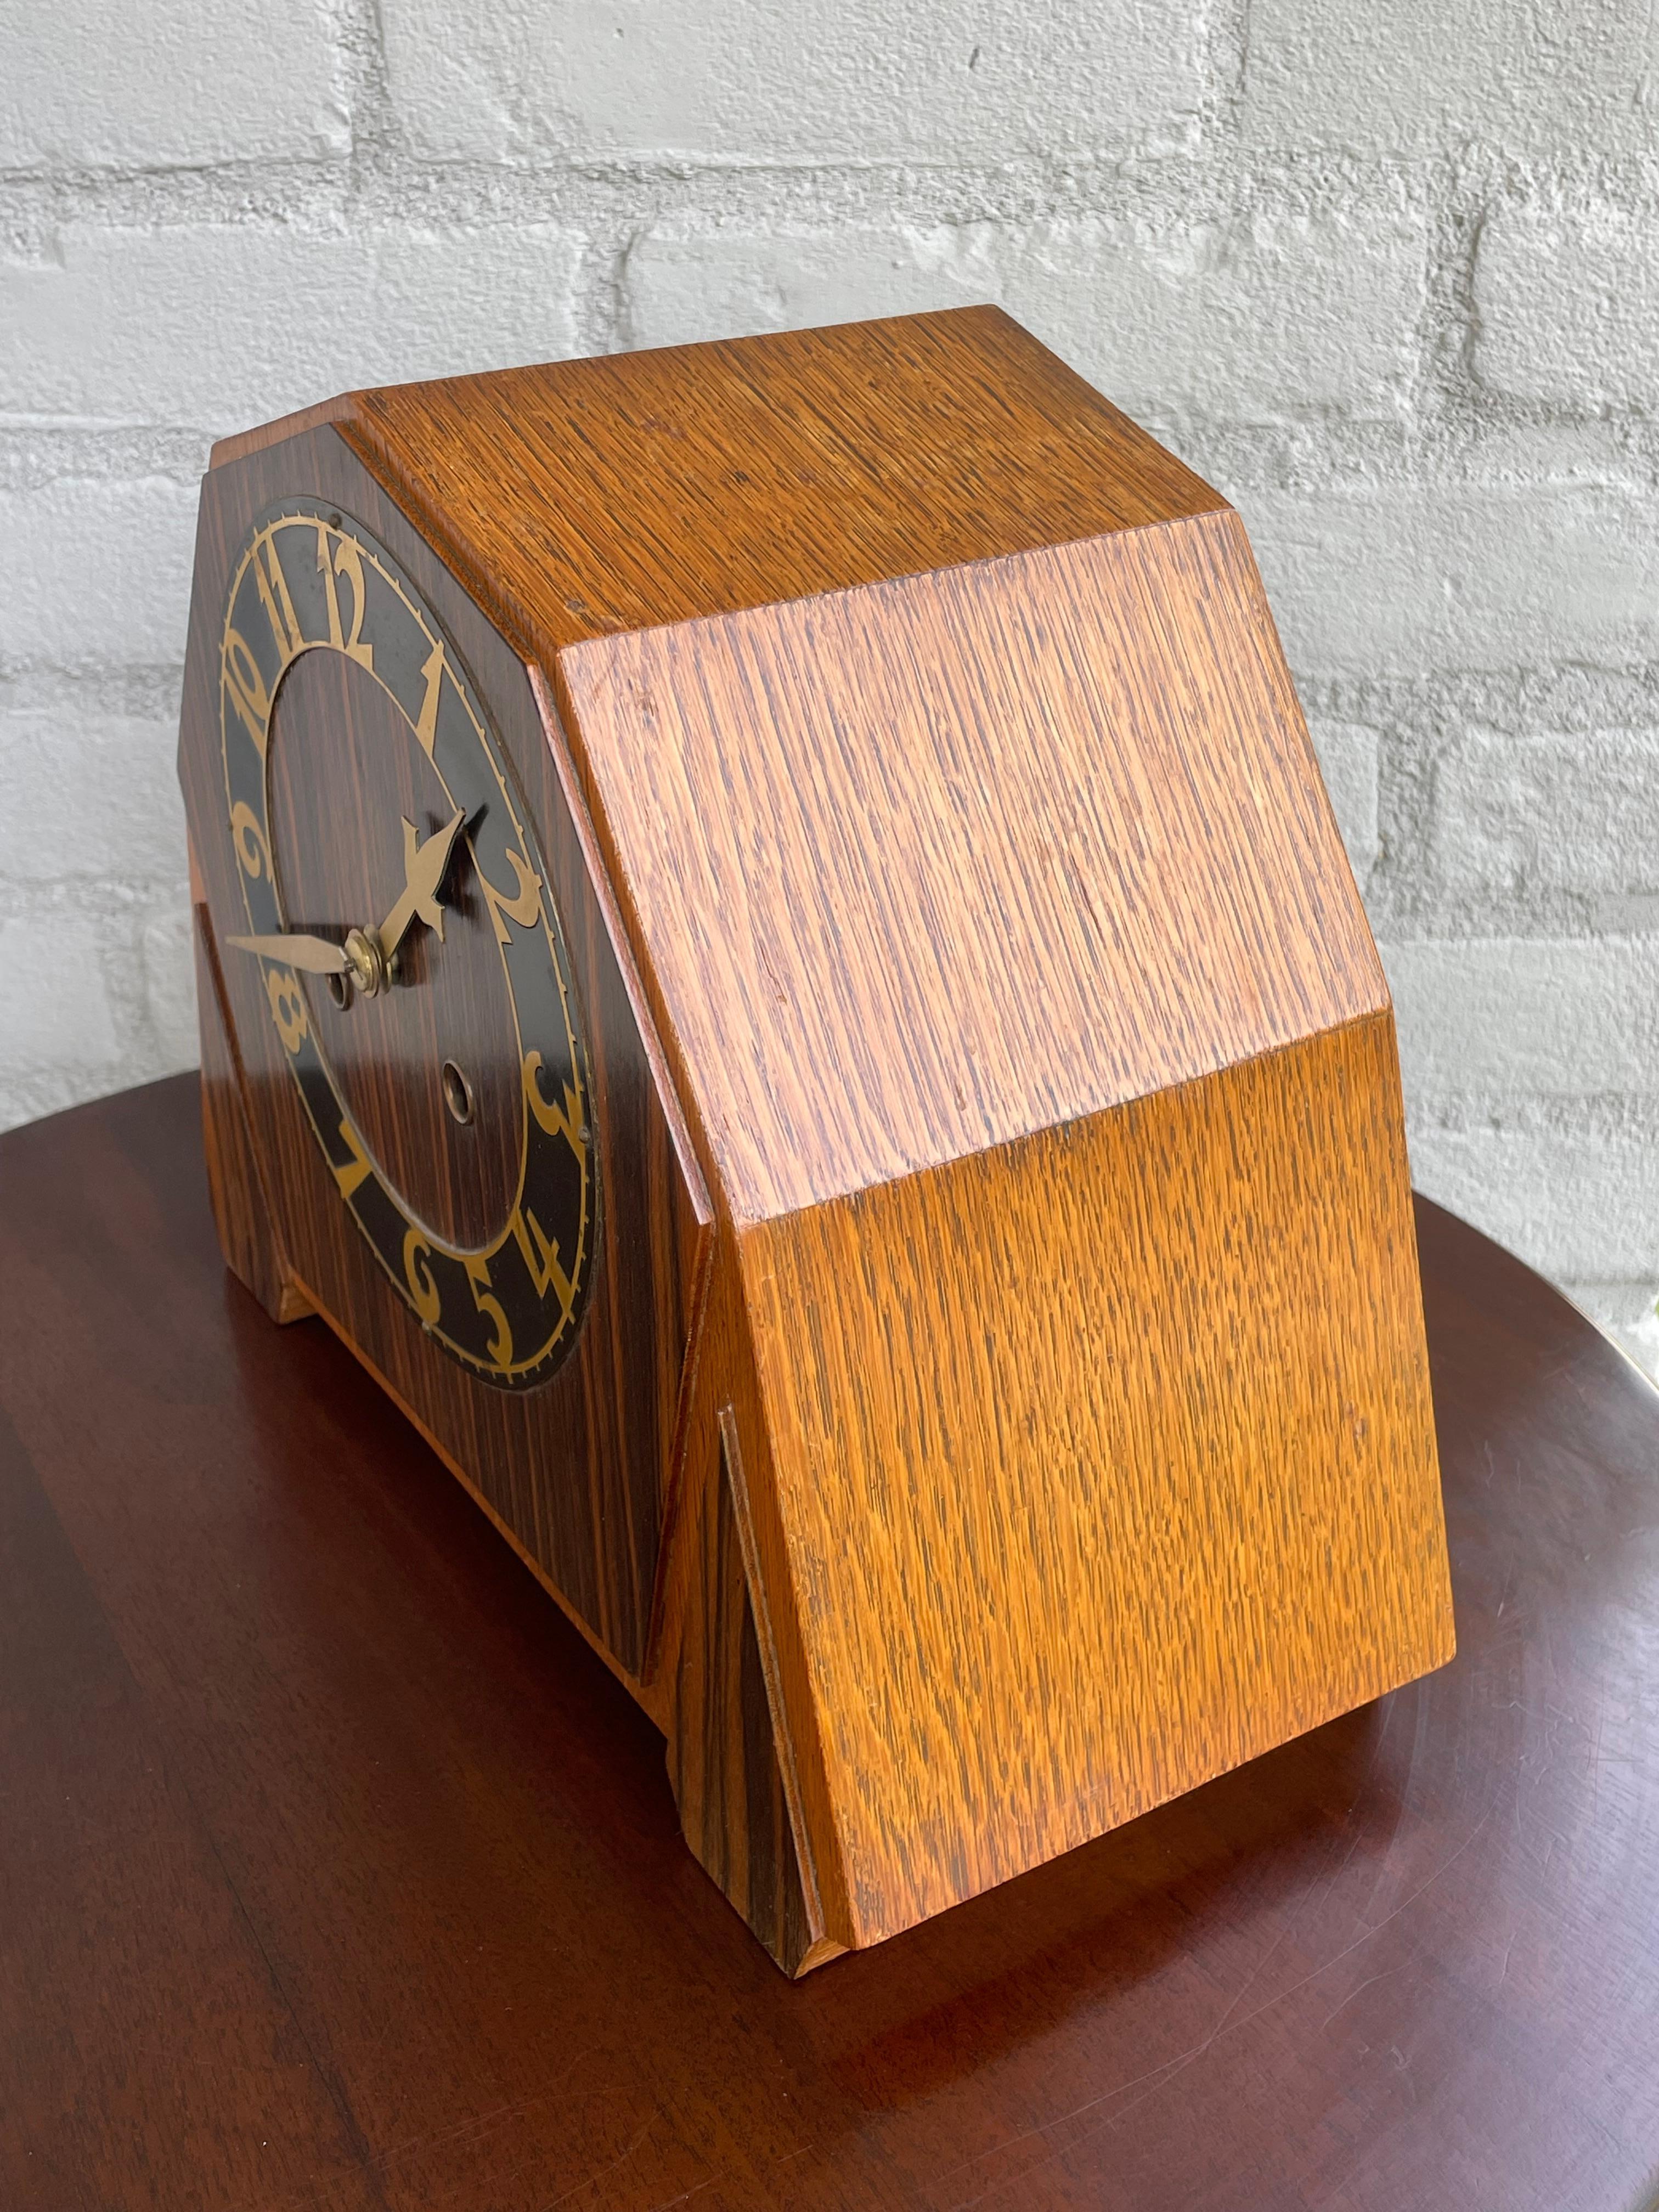 20th Century Art Deco Oak & Coromandel Mantel / Desk Clock w. Brass Arms and Dial Face 1920 For Sale